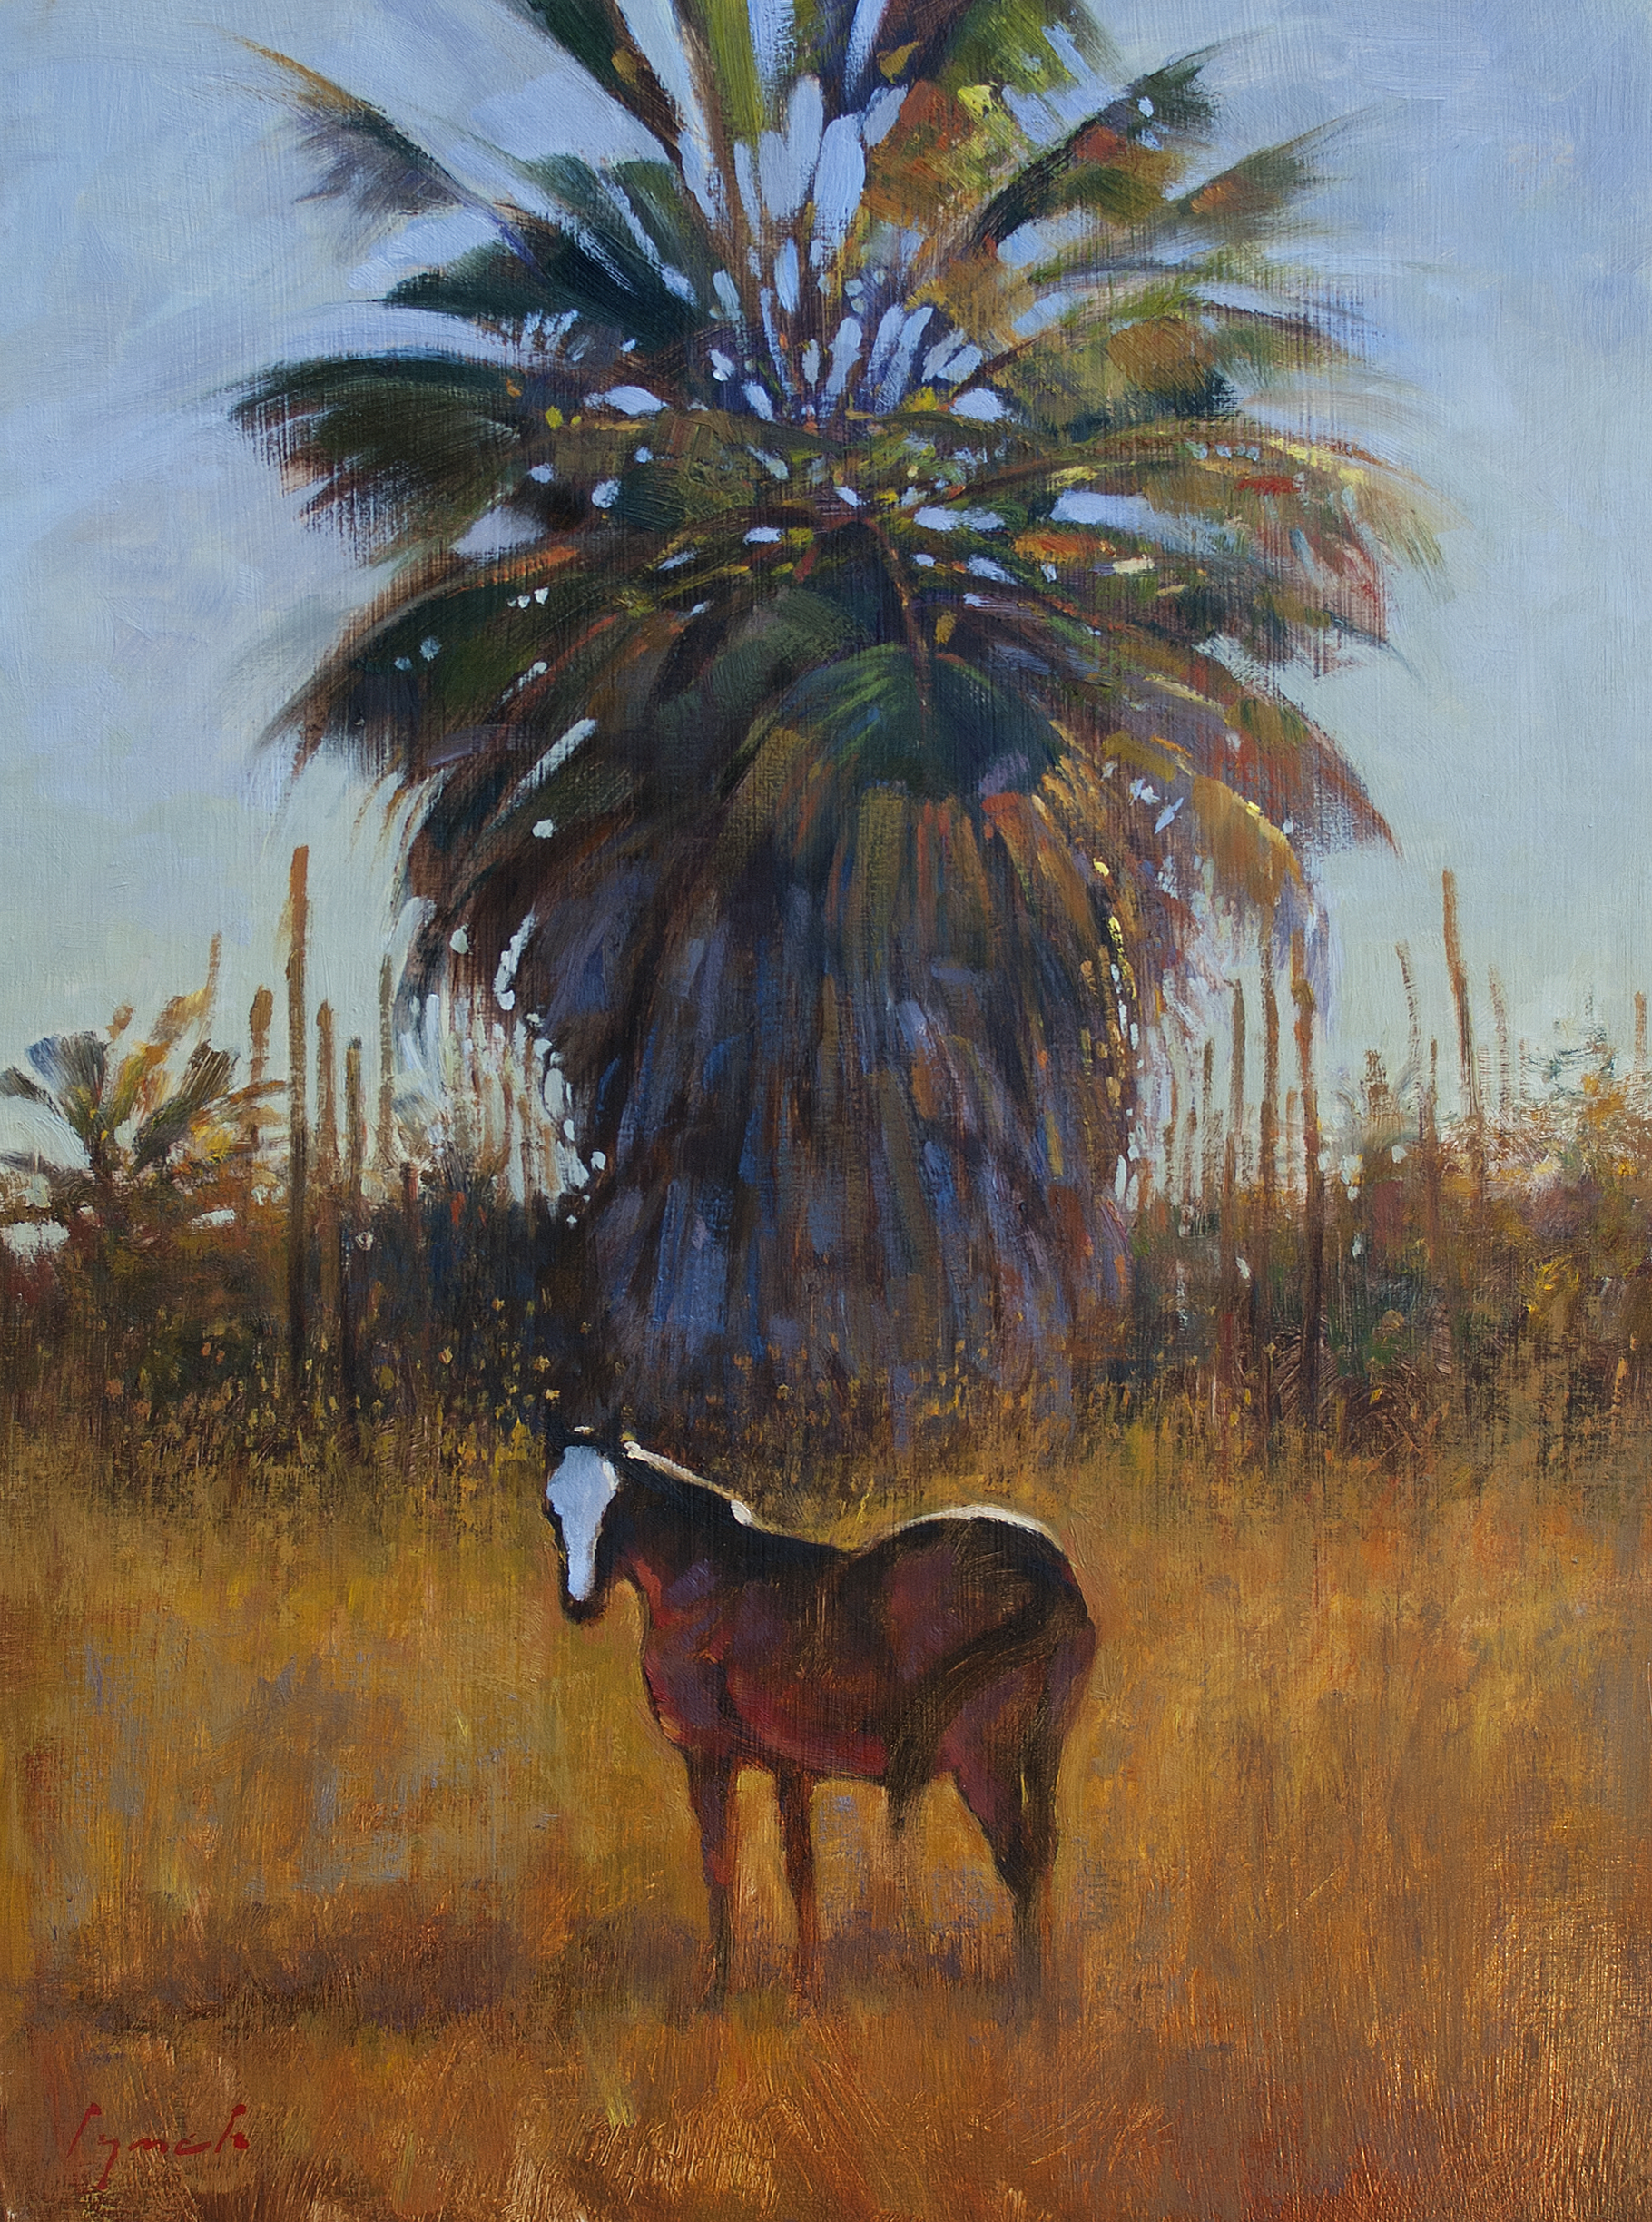 'Horse under Giant Palm' 16 X 20 in. oil on prepared board. Ida Victoria gallery